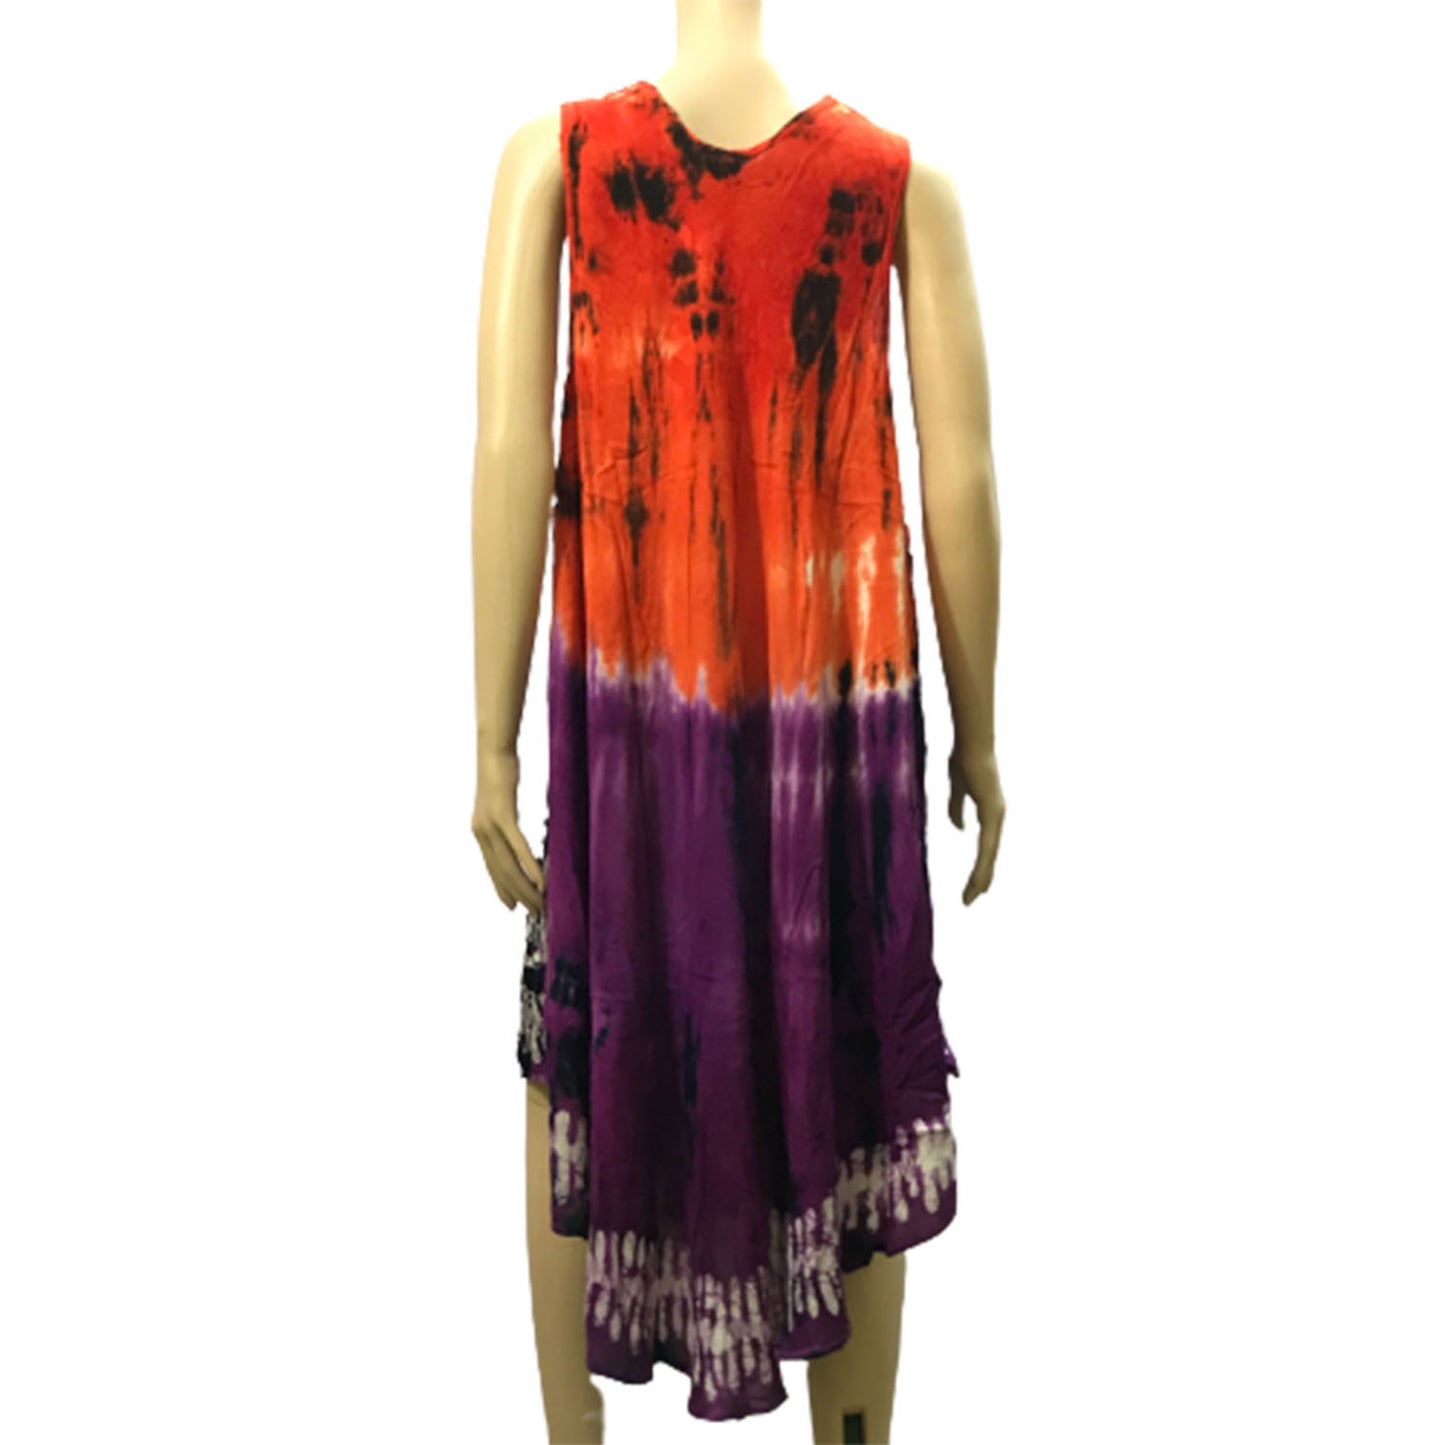 Ganesha Handicrafts Multicoloured Cut Sleeve Embroidered Dress, Dress, Embroidered Dress, Sleeve Dress, Cut Sleeve, Multicoloured Sleeve, Multicoloured Dress